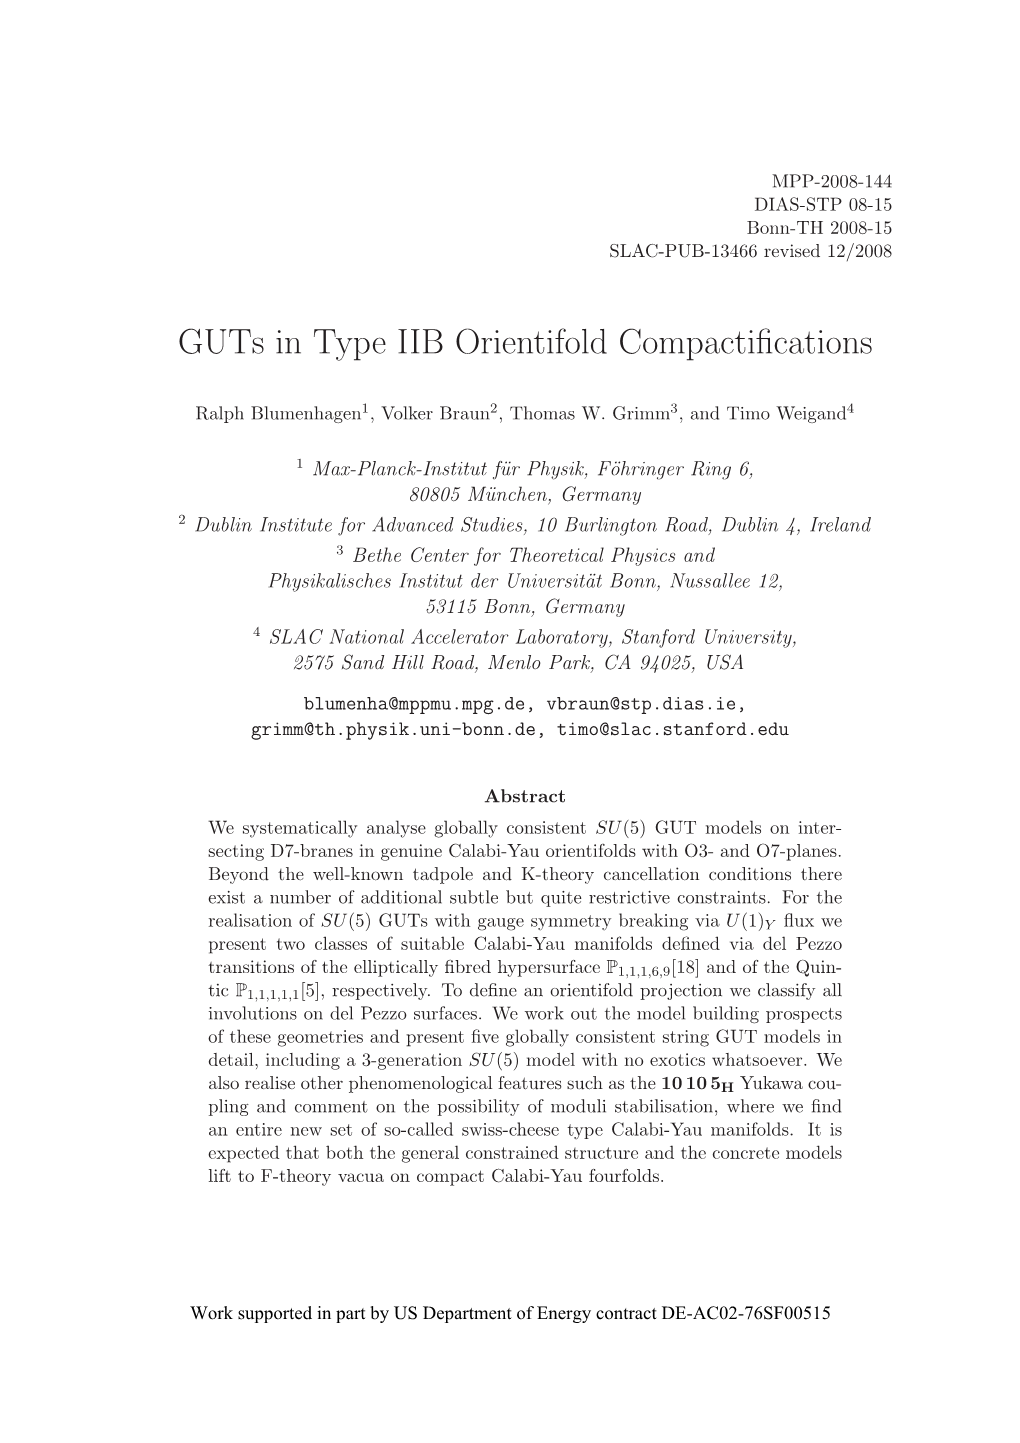 Guts in Type IIB Orientifold Compactifications